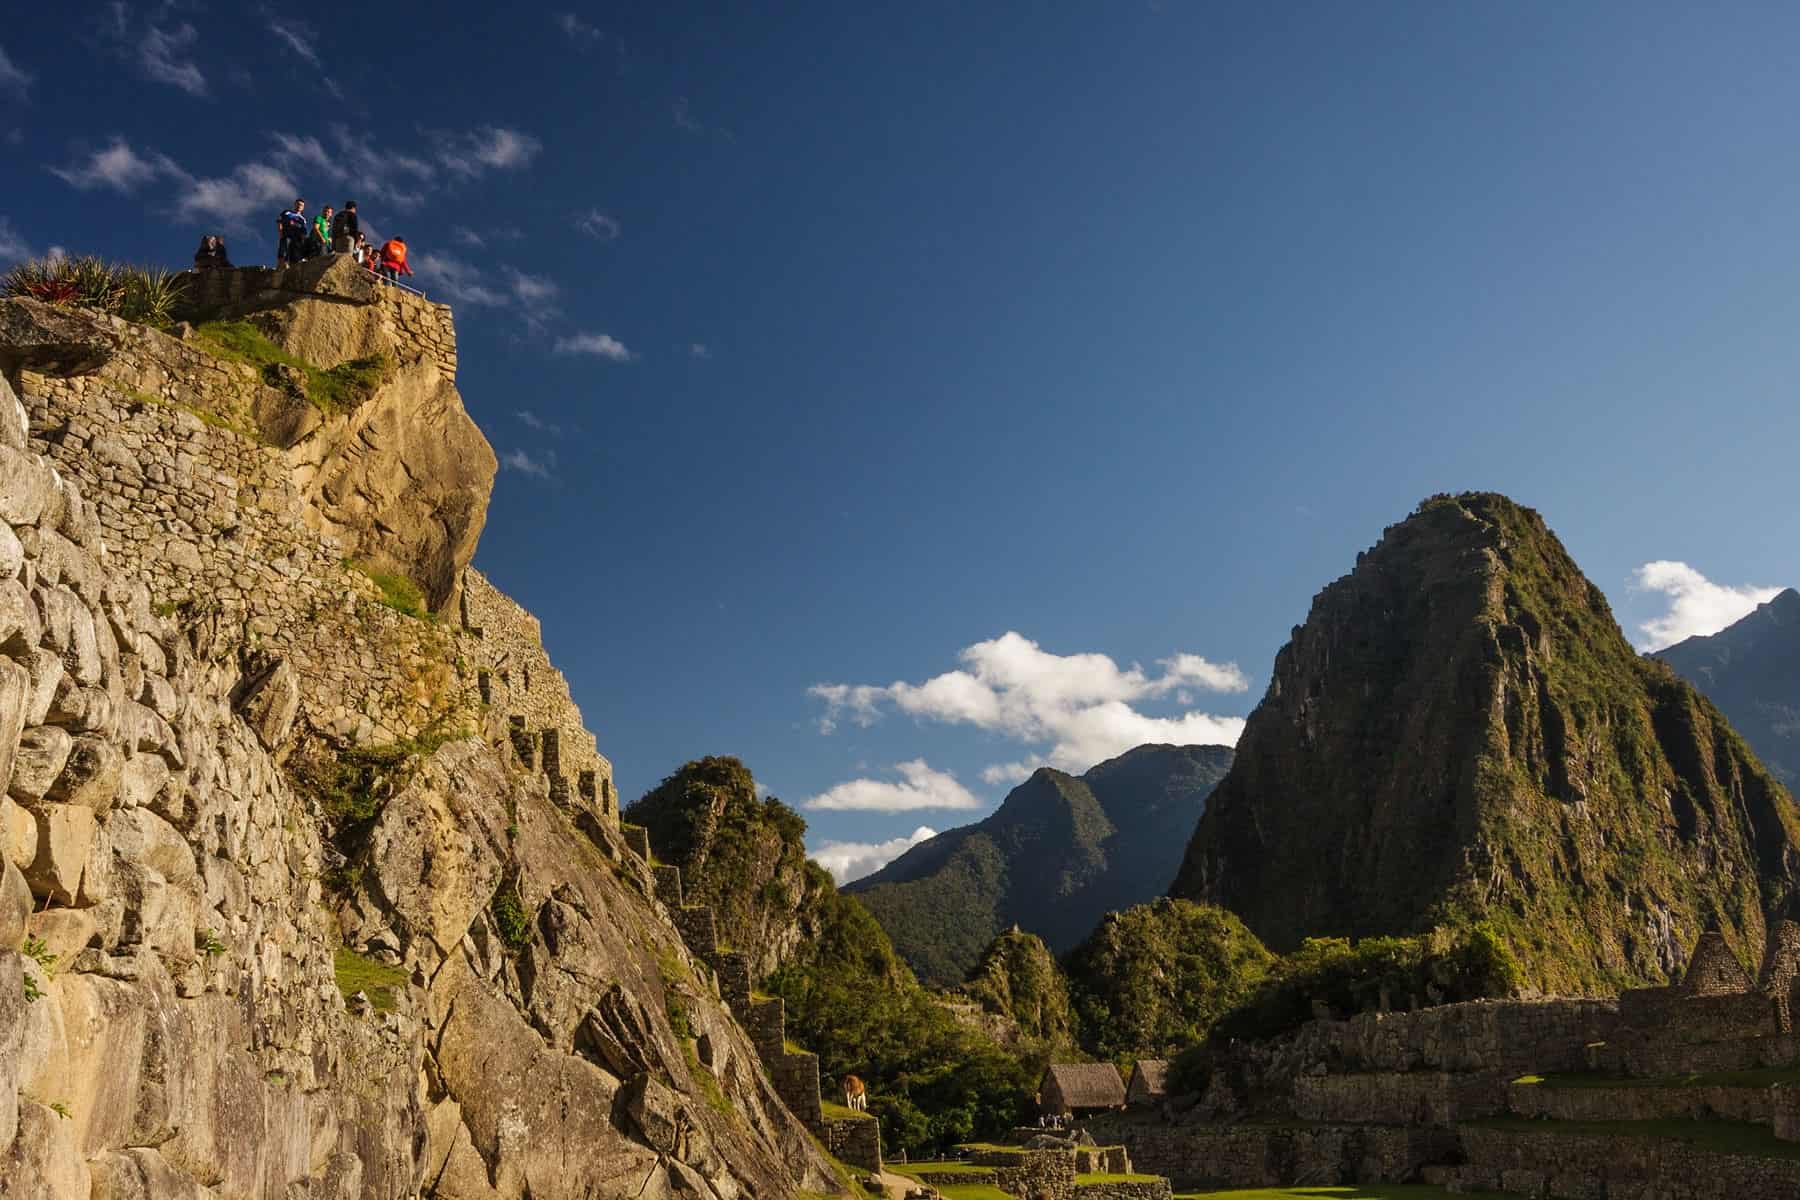 Short Inca Trail to Machu Picchu & Yanacocha Lake 4 Days